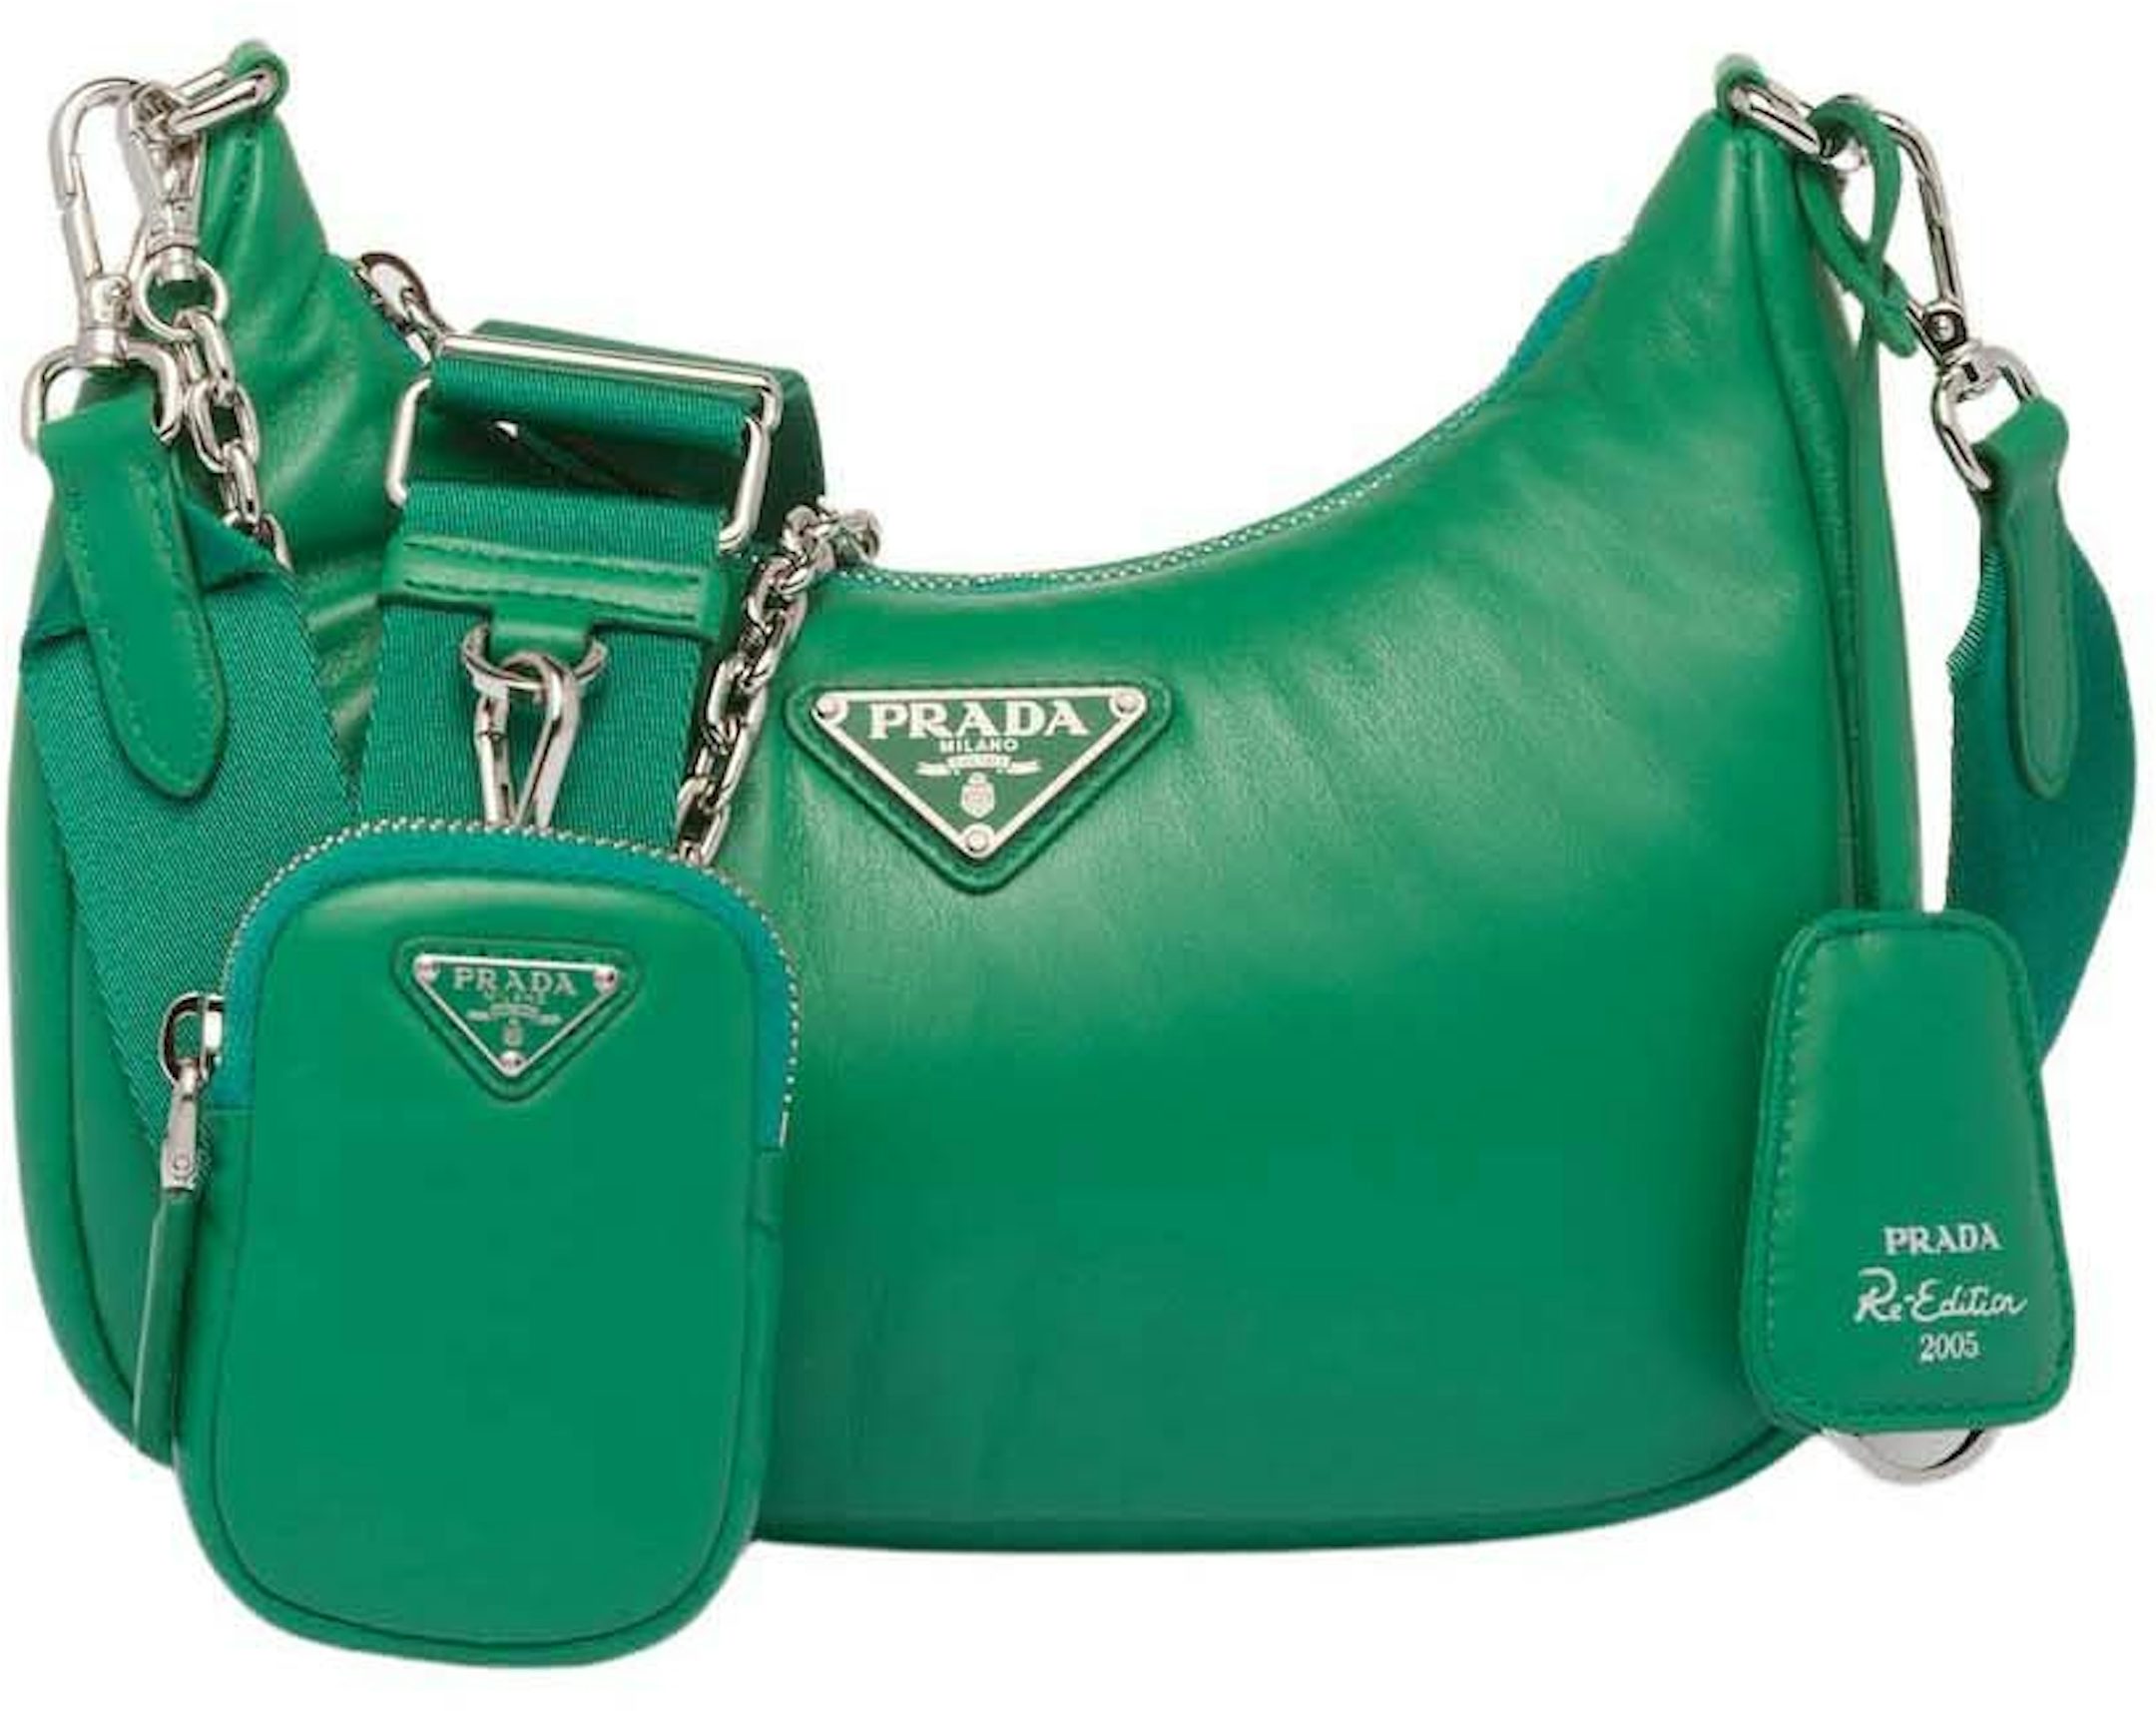 Prada Re-edition Saffiano Leather Mini Bag - Mango